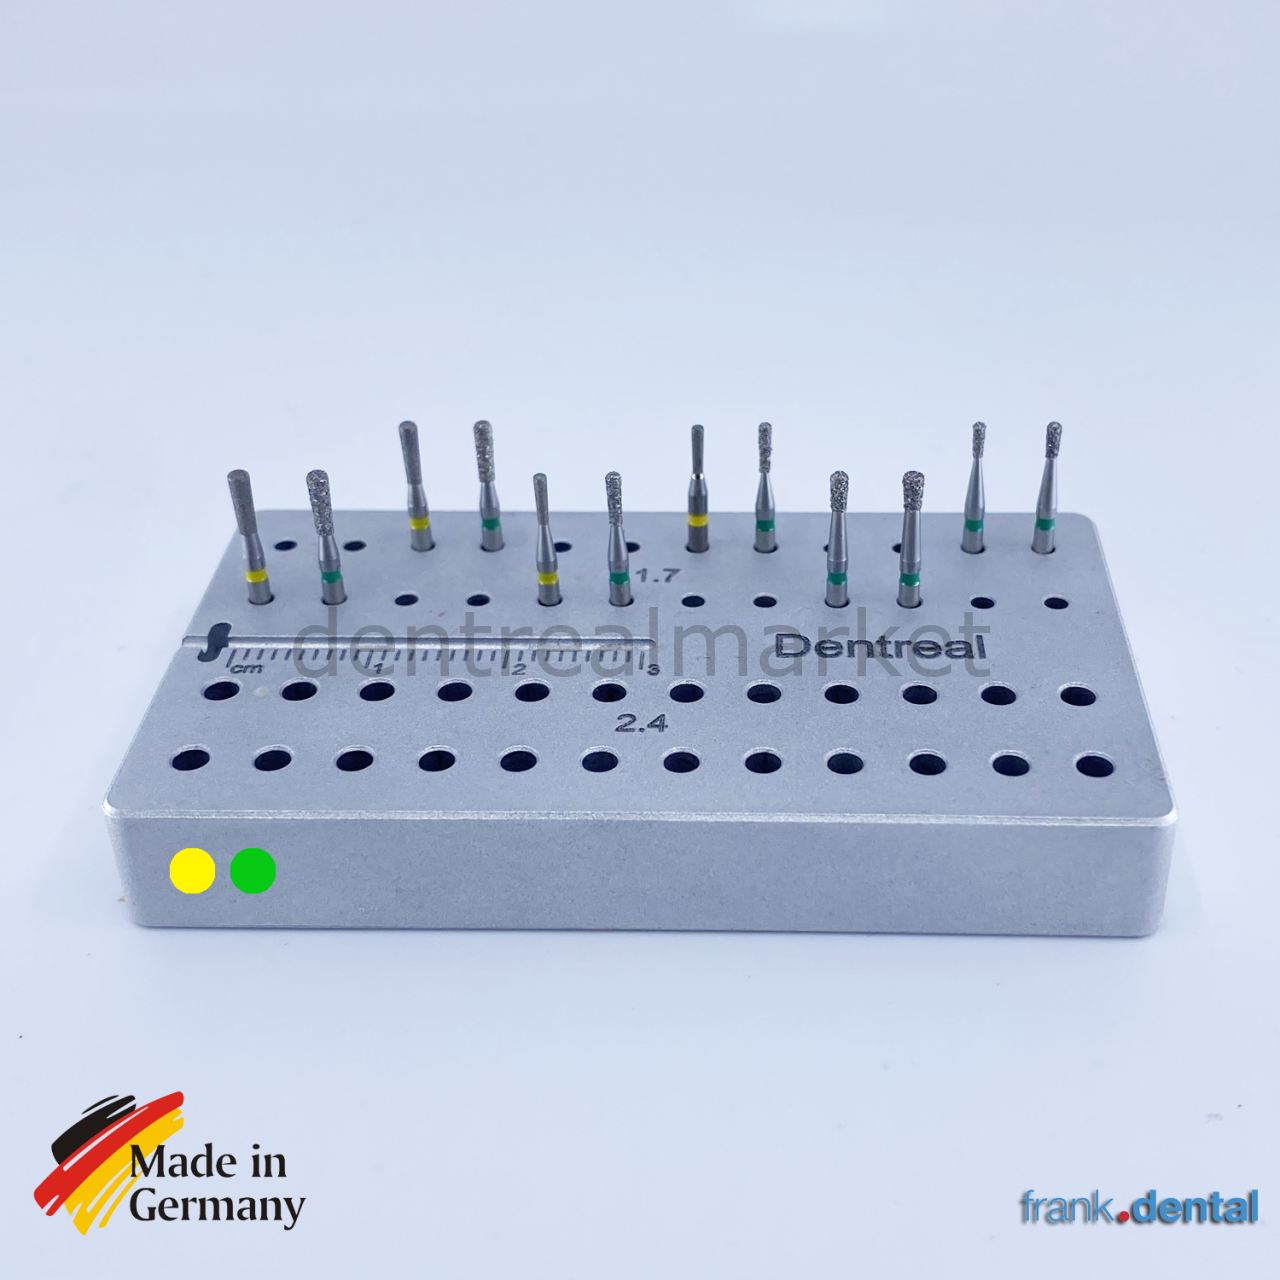 DentrealStore - Frank Dental Conical Filler Preparation Dental Natural Diamond Bur Set